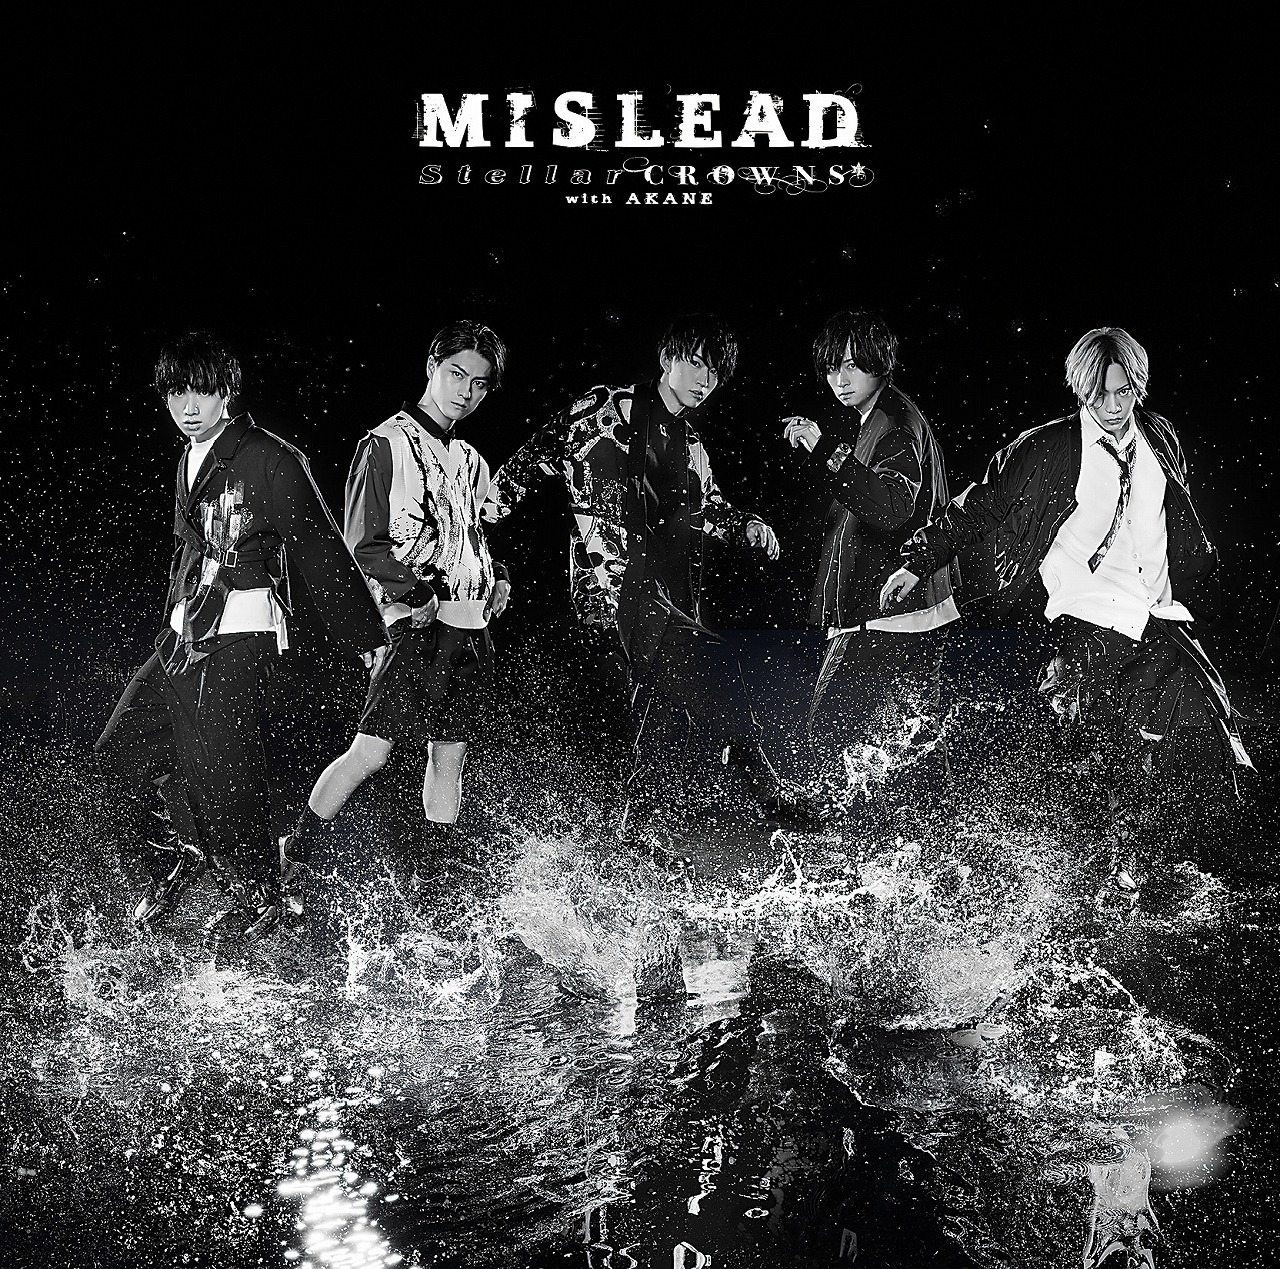 「MISLEAD」初回限定盤